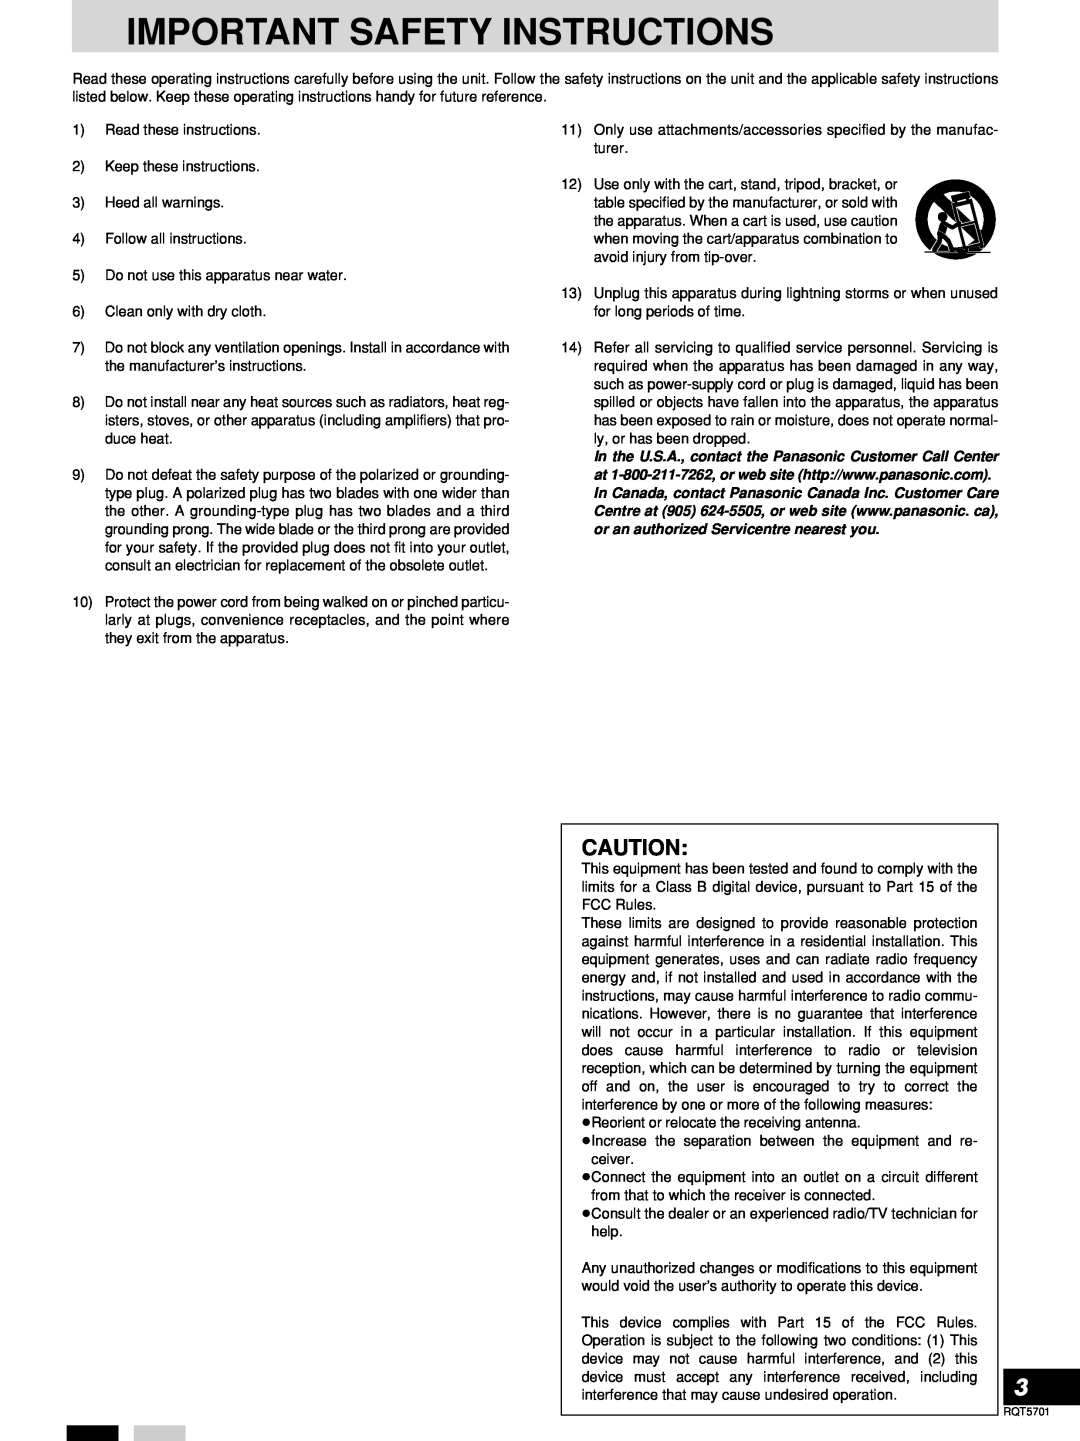 Panasonic SL-PG4 manual Important Safety Instructions 